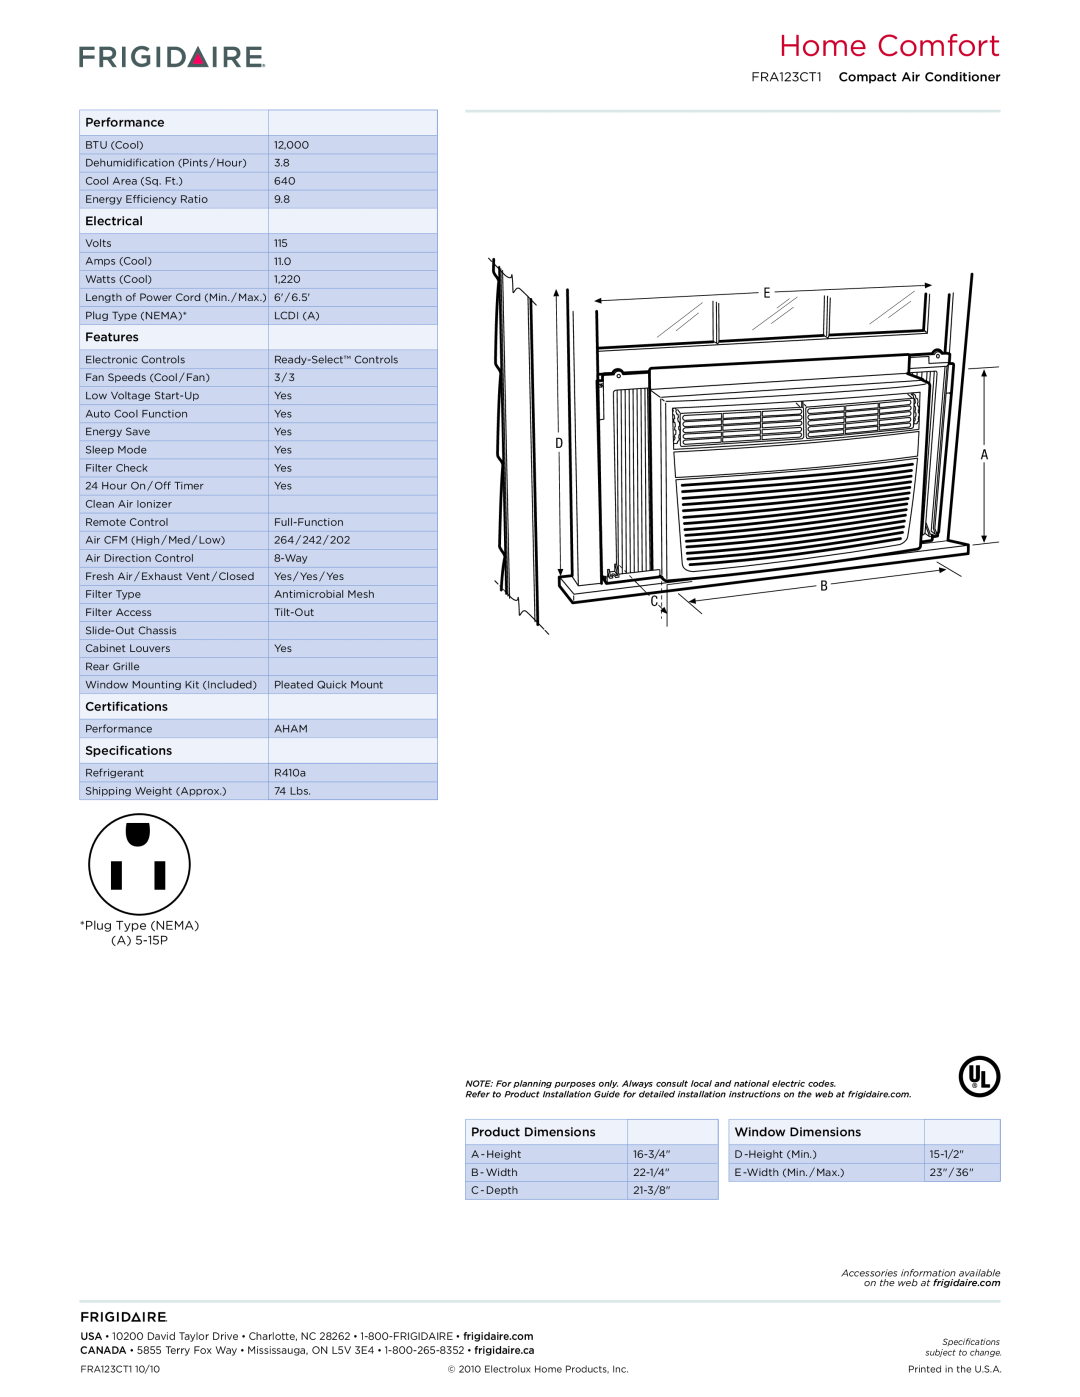 Frigidaire dimensions Home Comfort, E D A B C, FRA123CT1 Compact Air Conditioner 